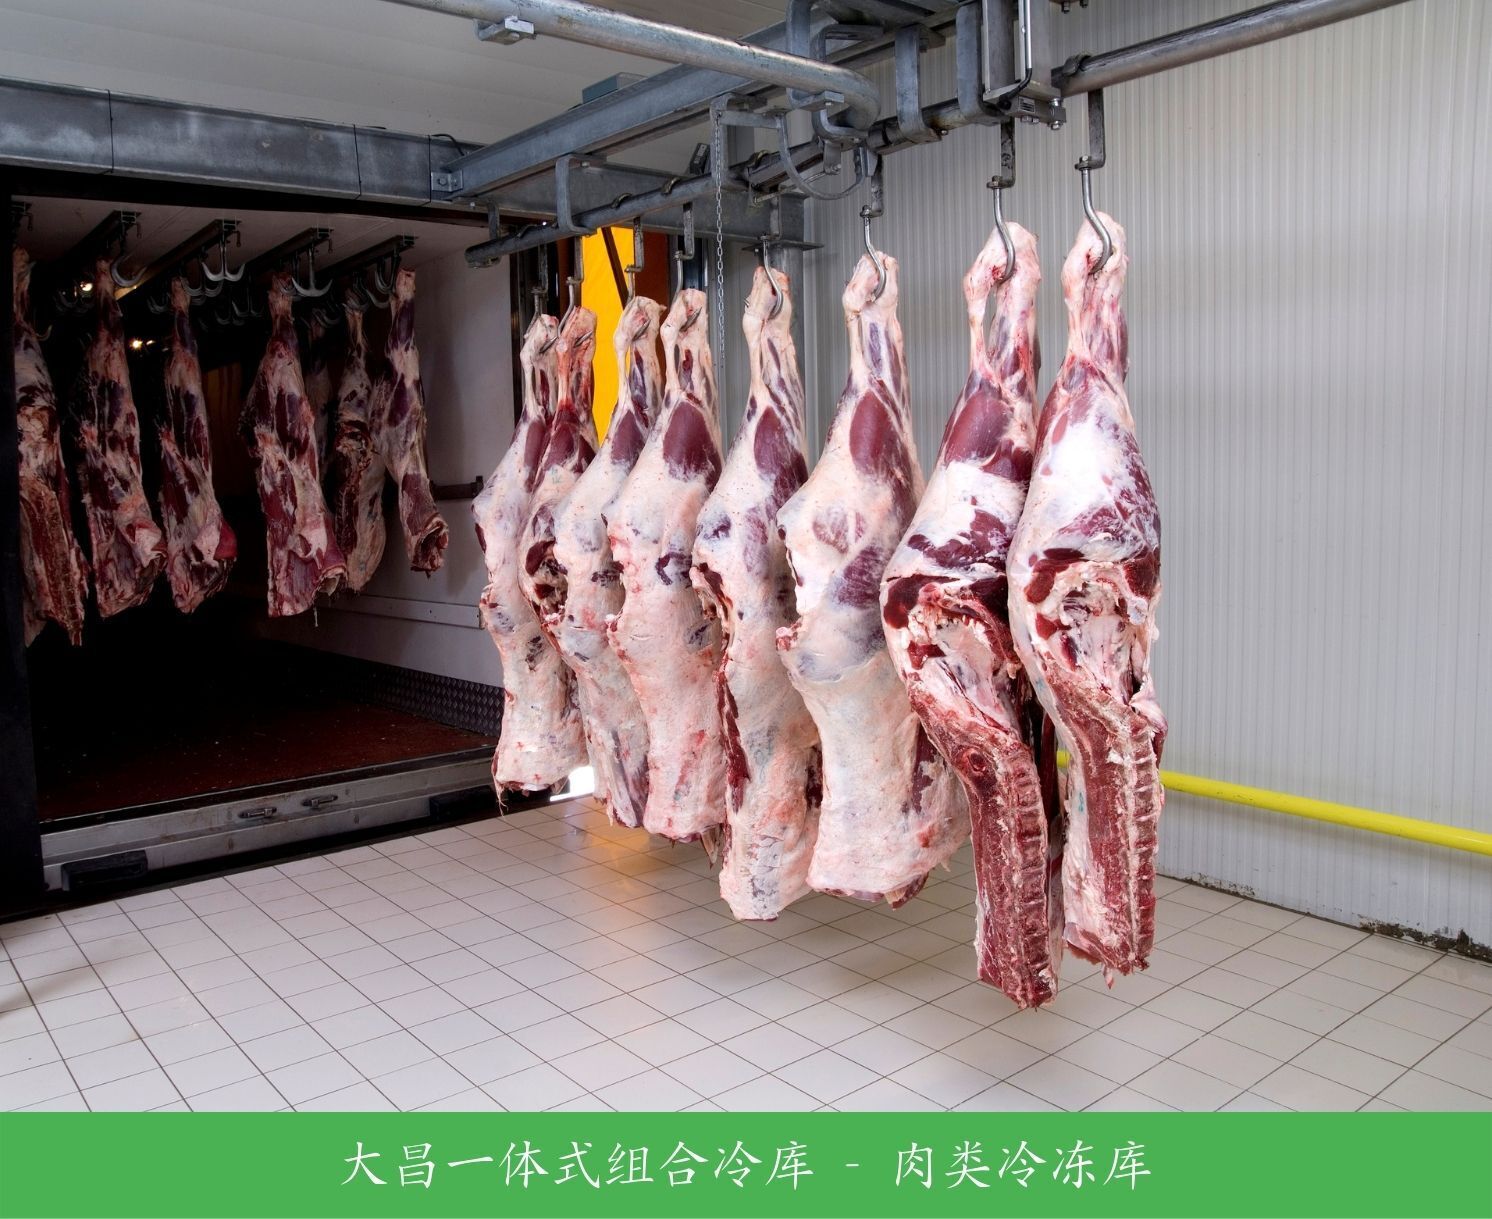 Dachang-meat-freezer-003